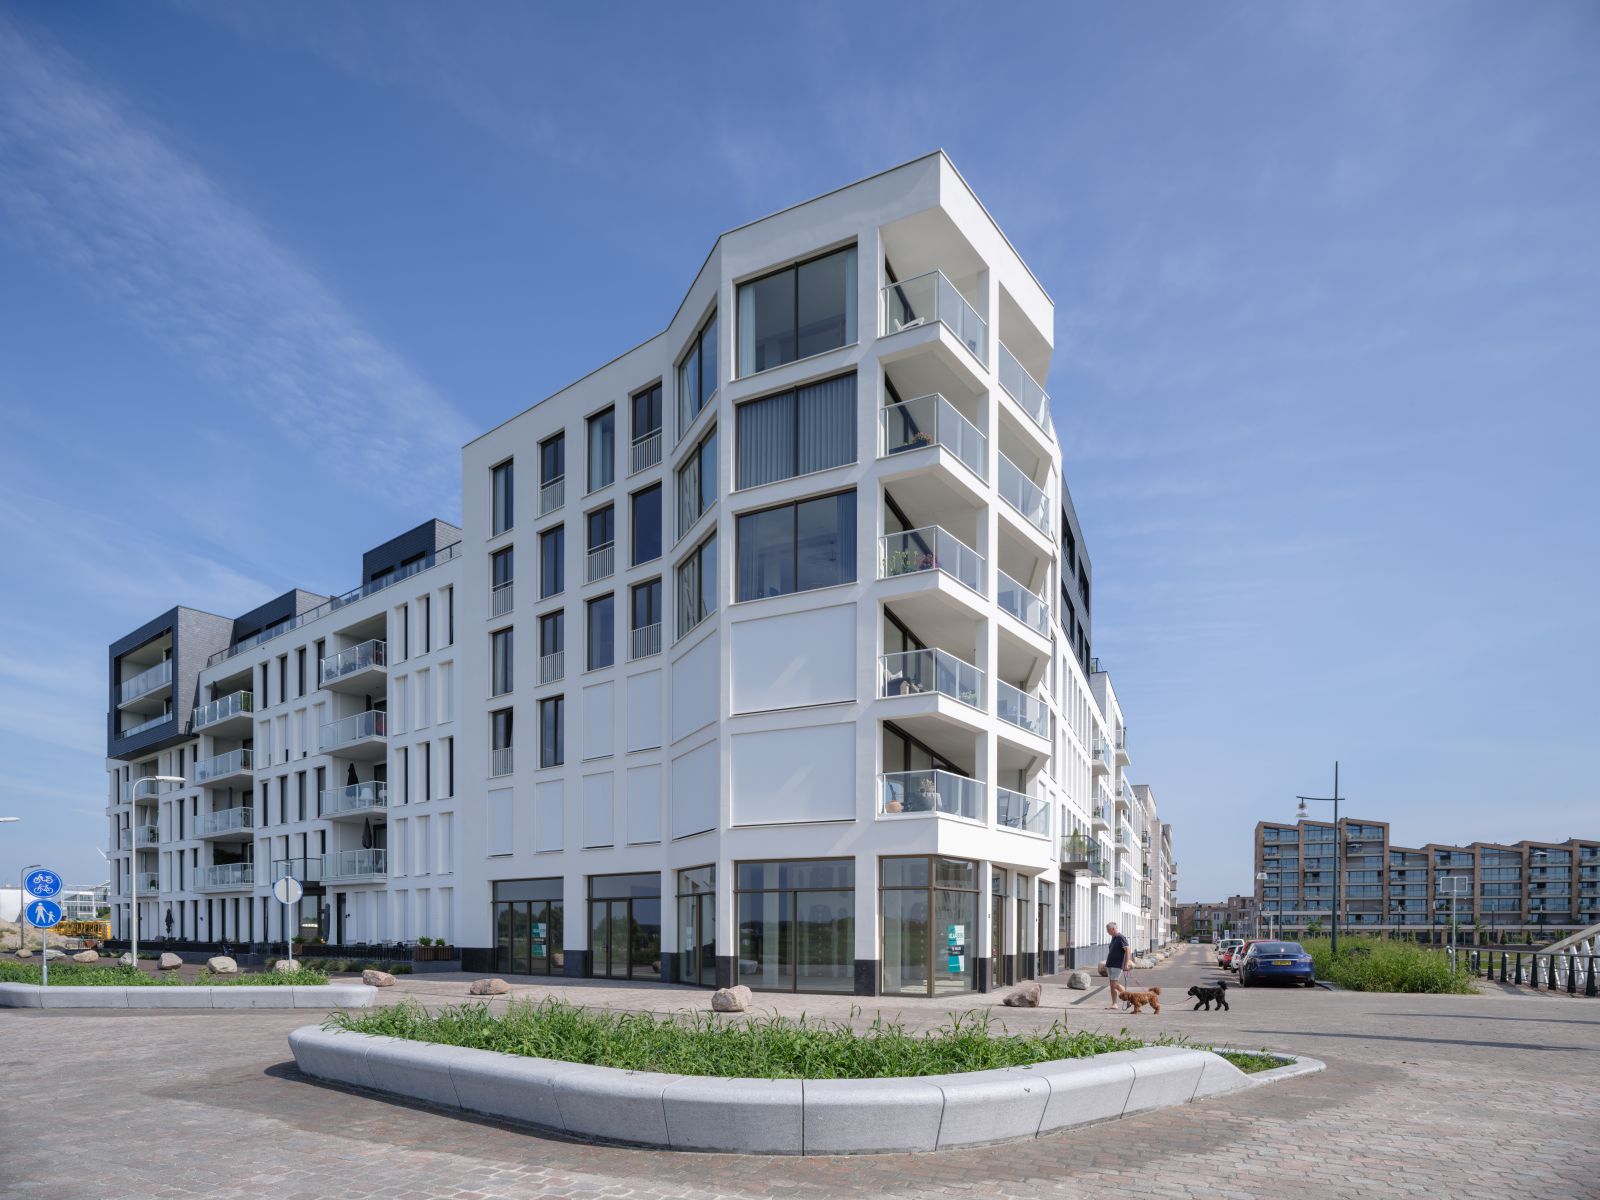 Kade-Noord-in-Zutphen-by-KCAP-and-Zecc-Architecten-11 – aasarchitecture